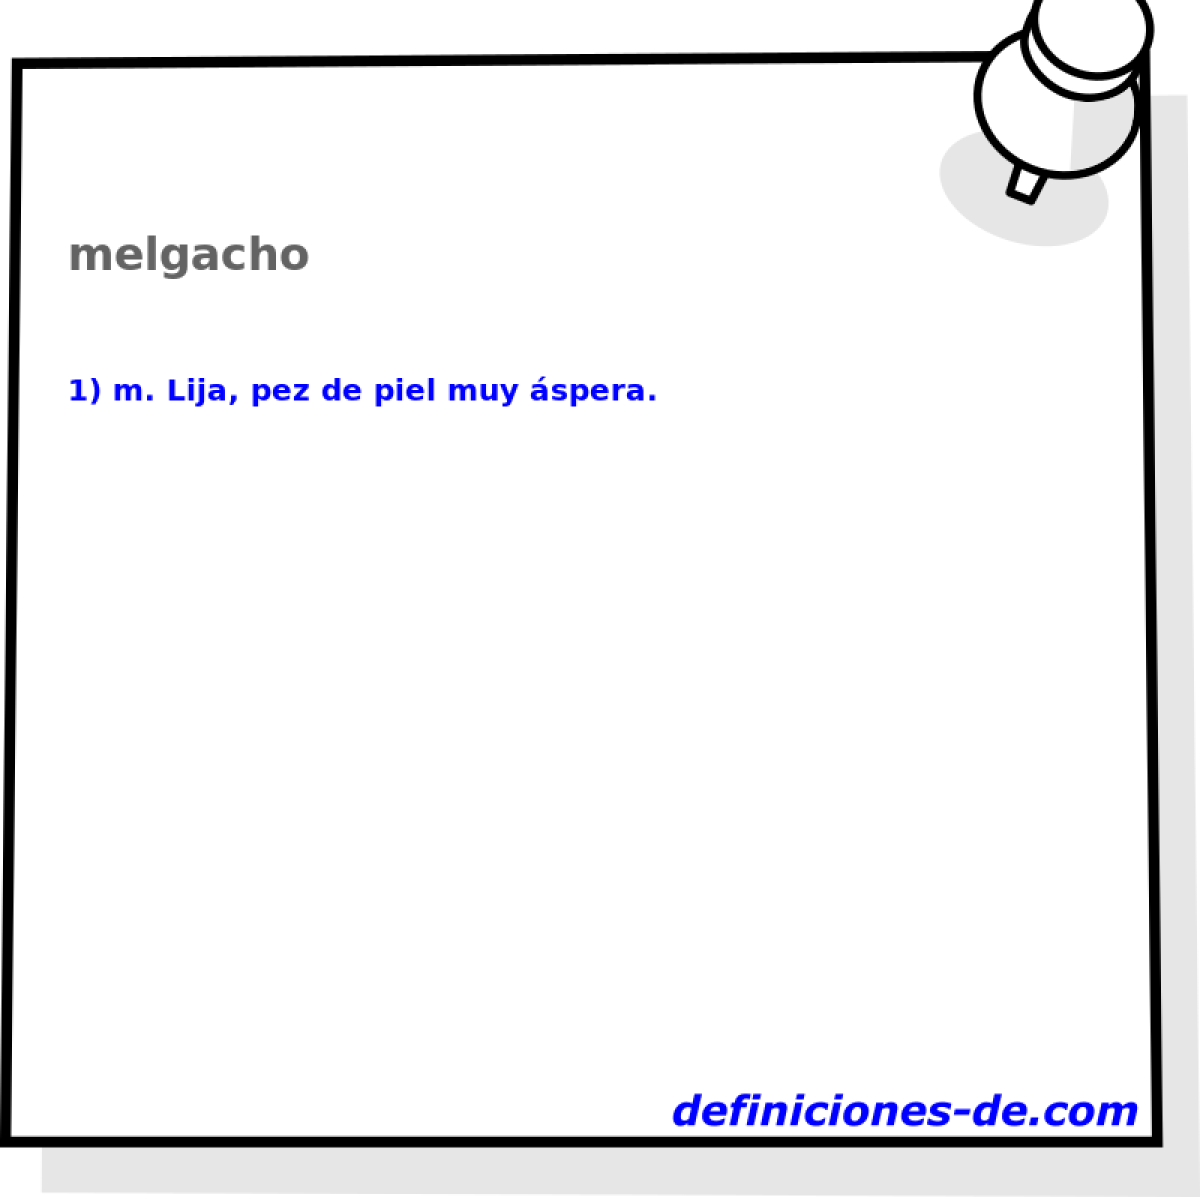 melgacho 